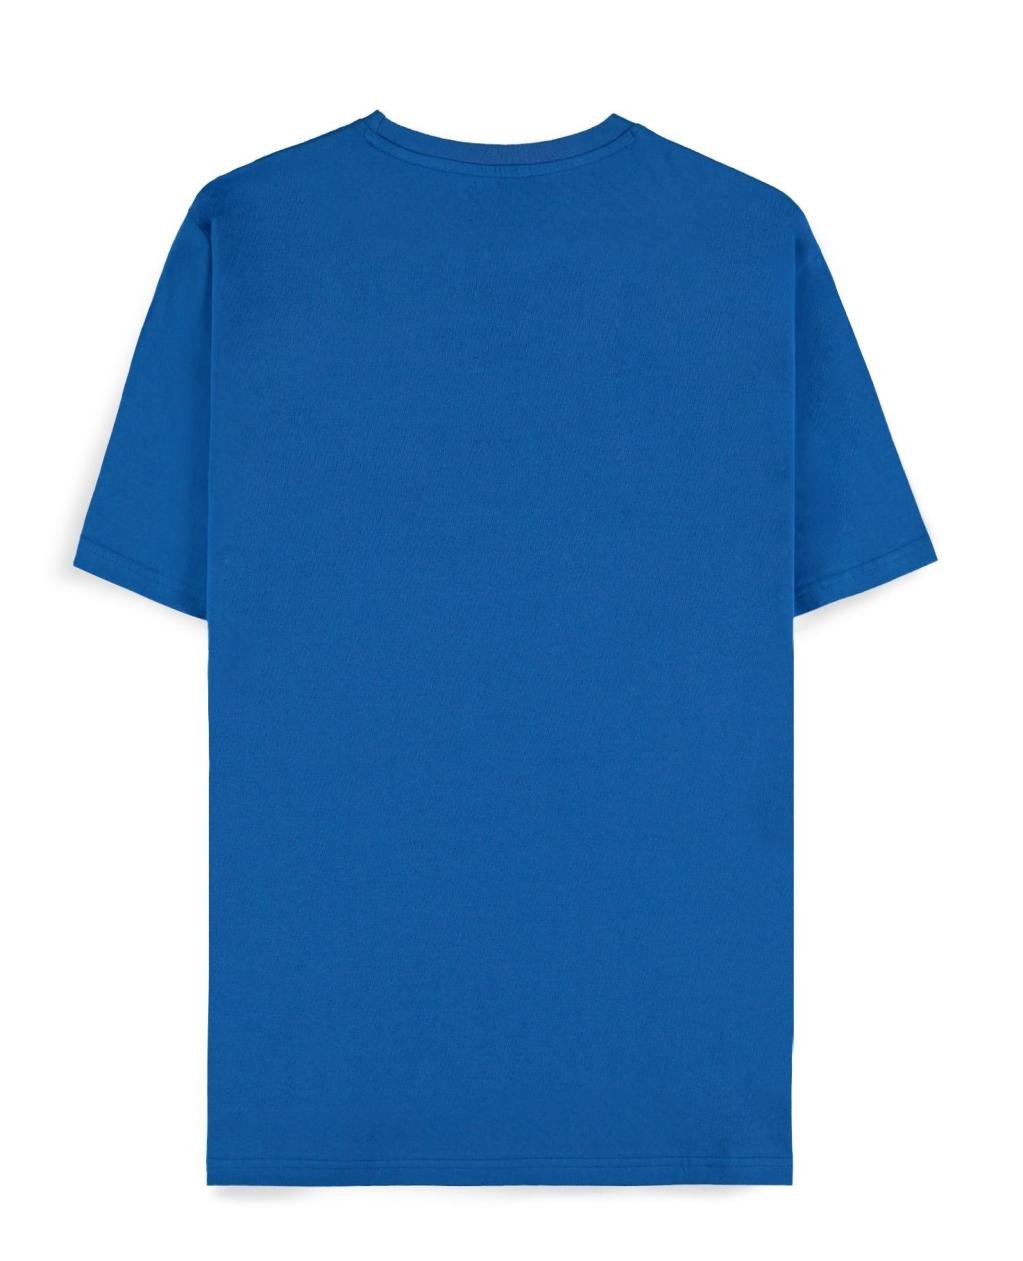 POKEMON - Blue Squirtle - Men's T-shirt (XS)